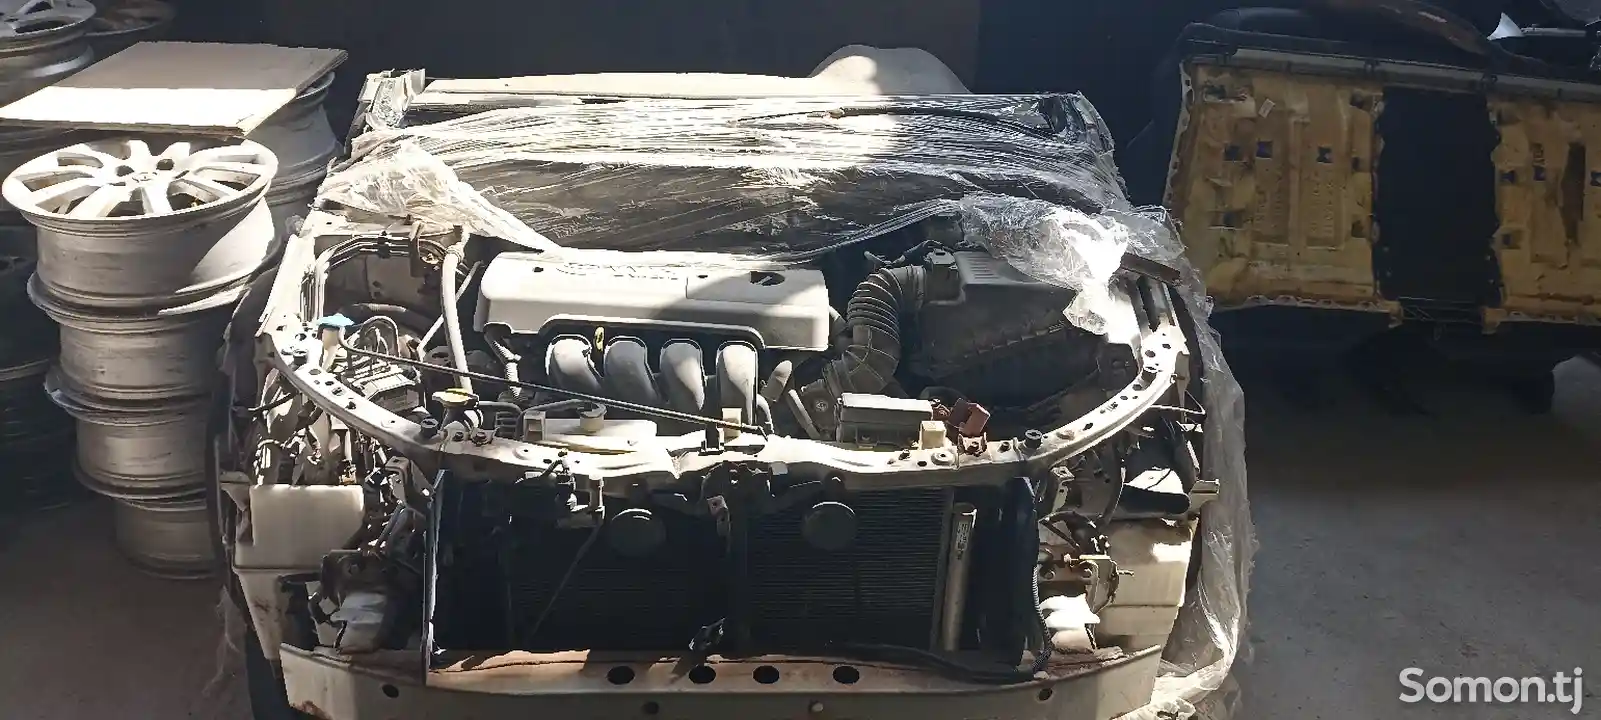 Двигатель на Toyota avensis 1.8